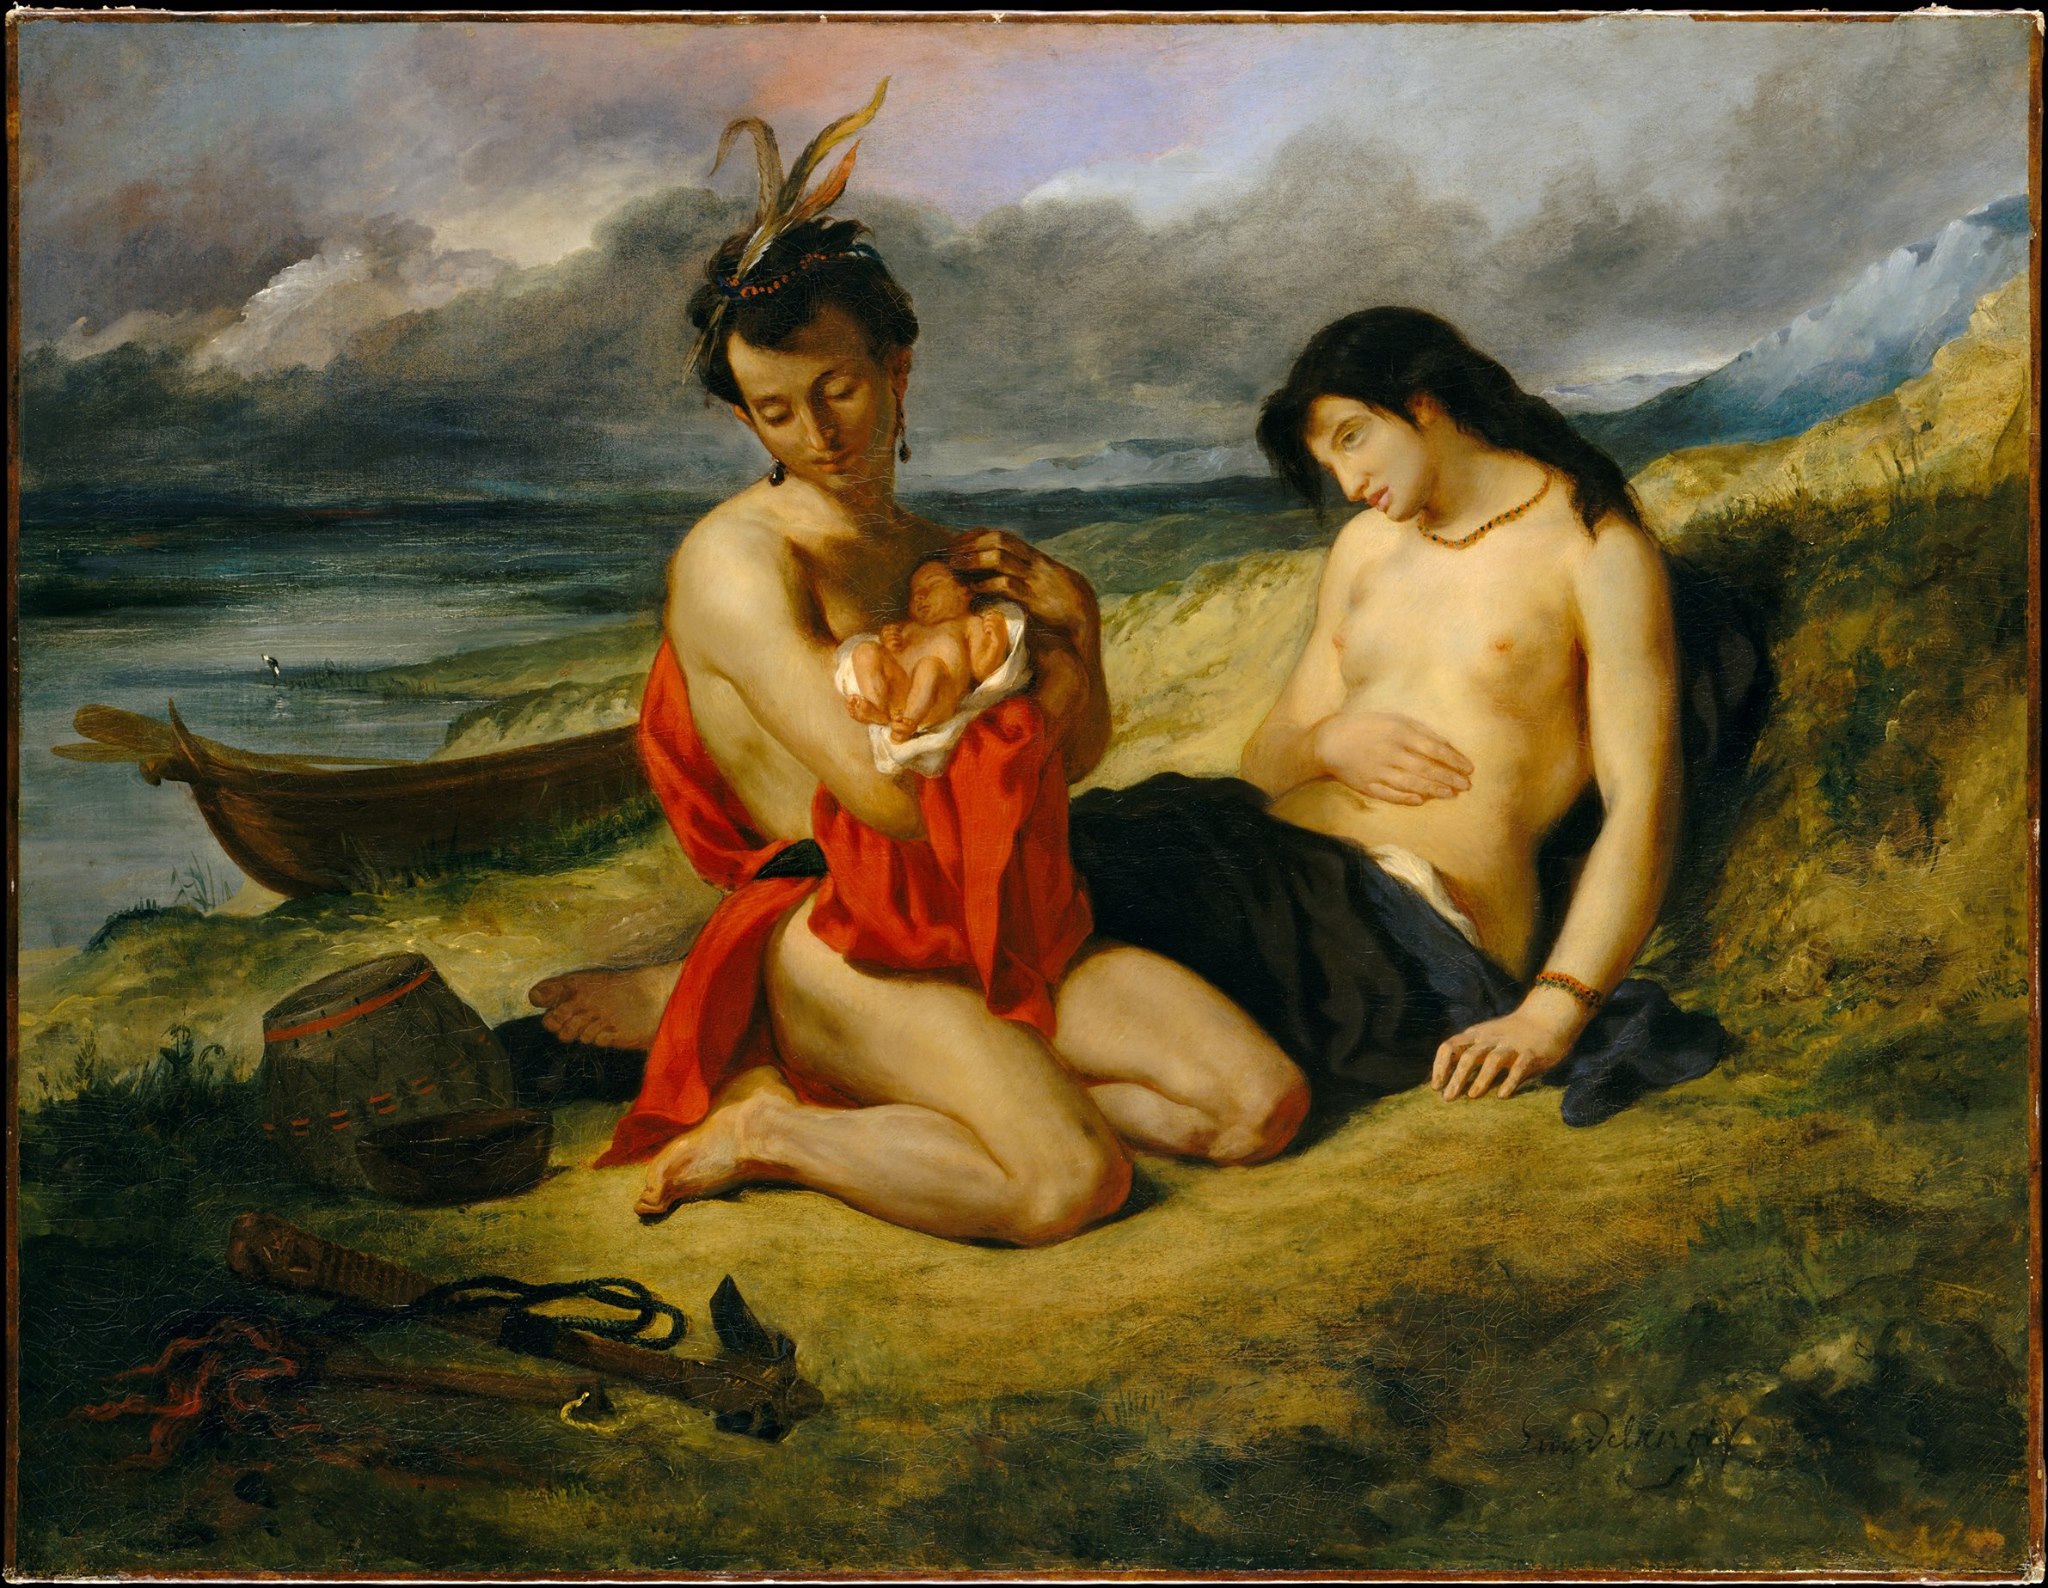 Who was Eugene Delacroix